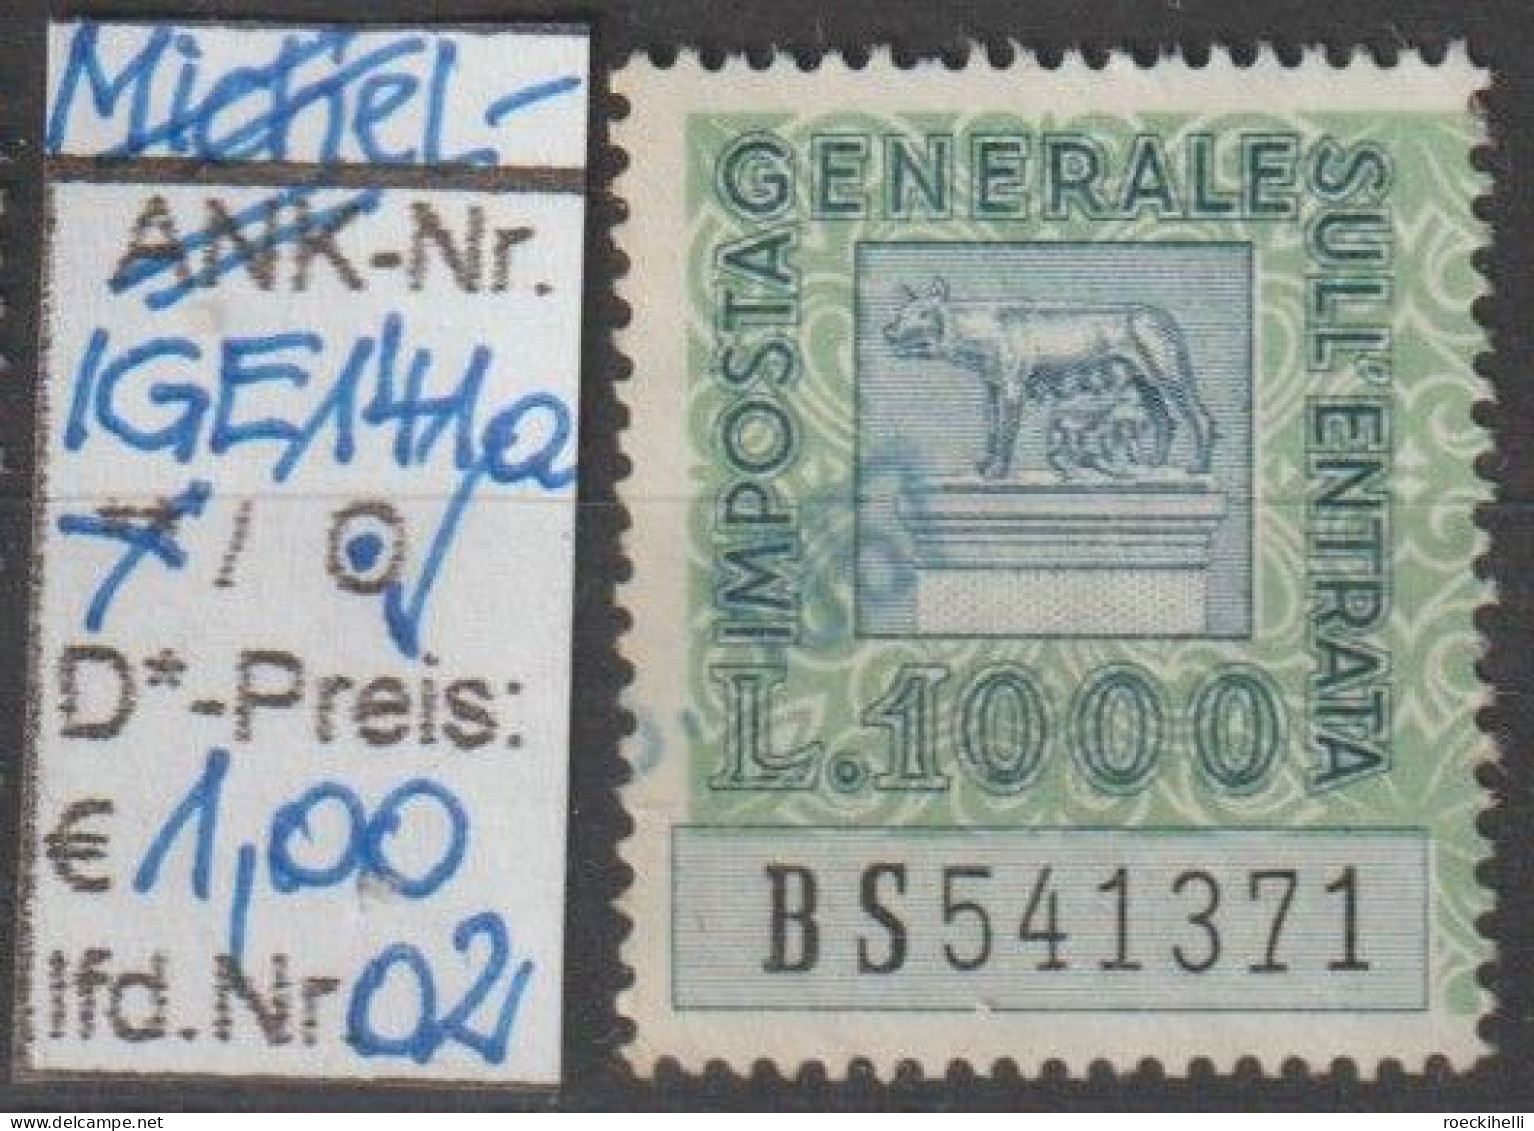 1961 - ITALIEN - Steuermarken "Imposta Gen. Sull Entrata" 1000 L Mehrf. - O Gestempelt - S.Scan (it IGE 141ao 01-02) - Fiscales